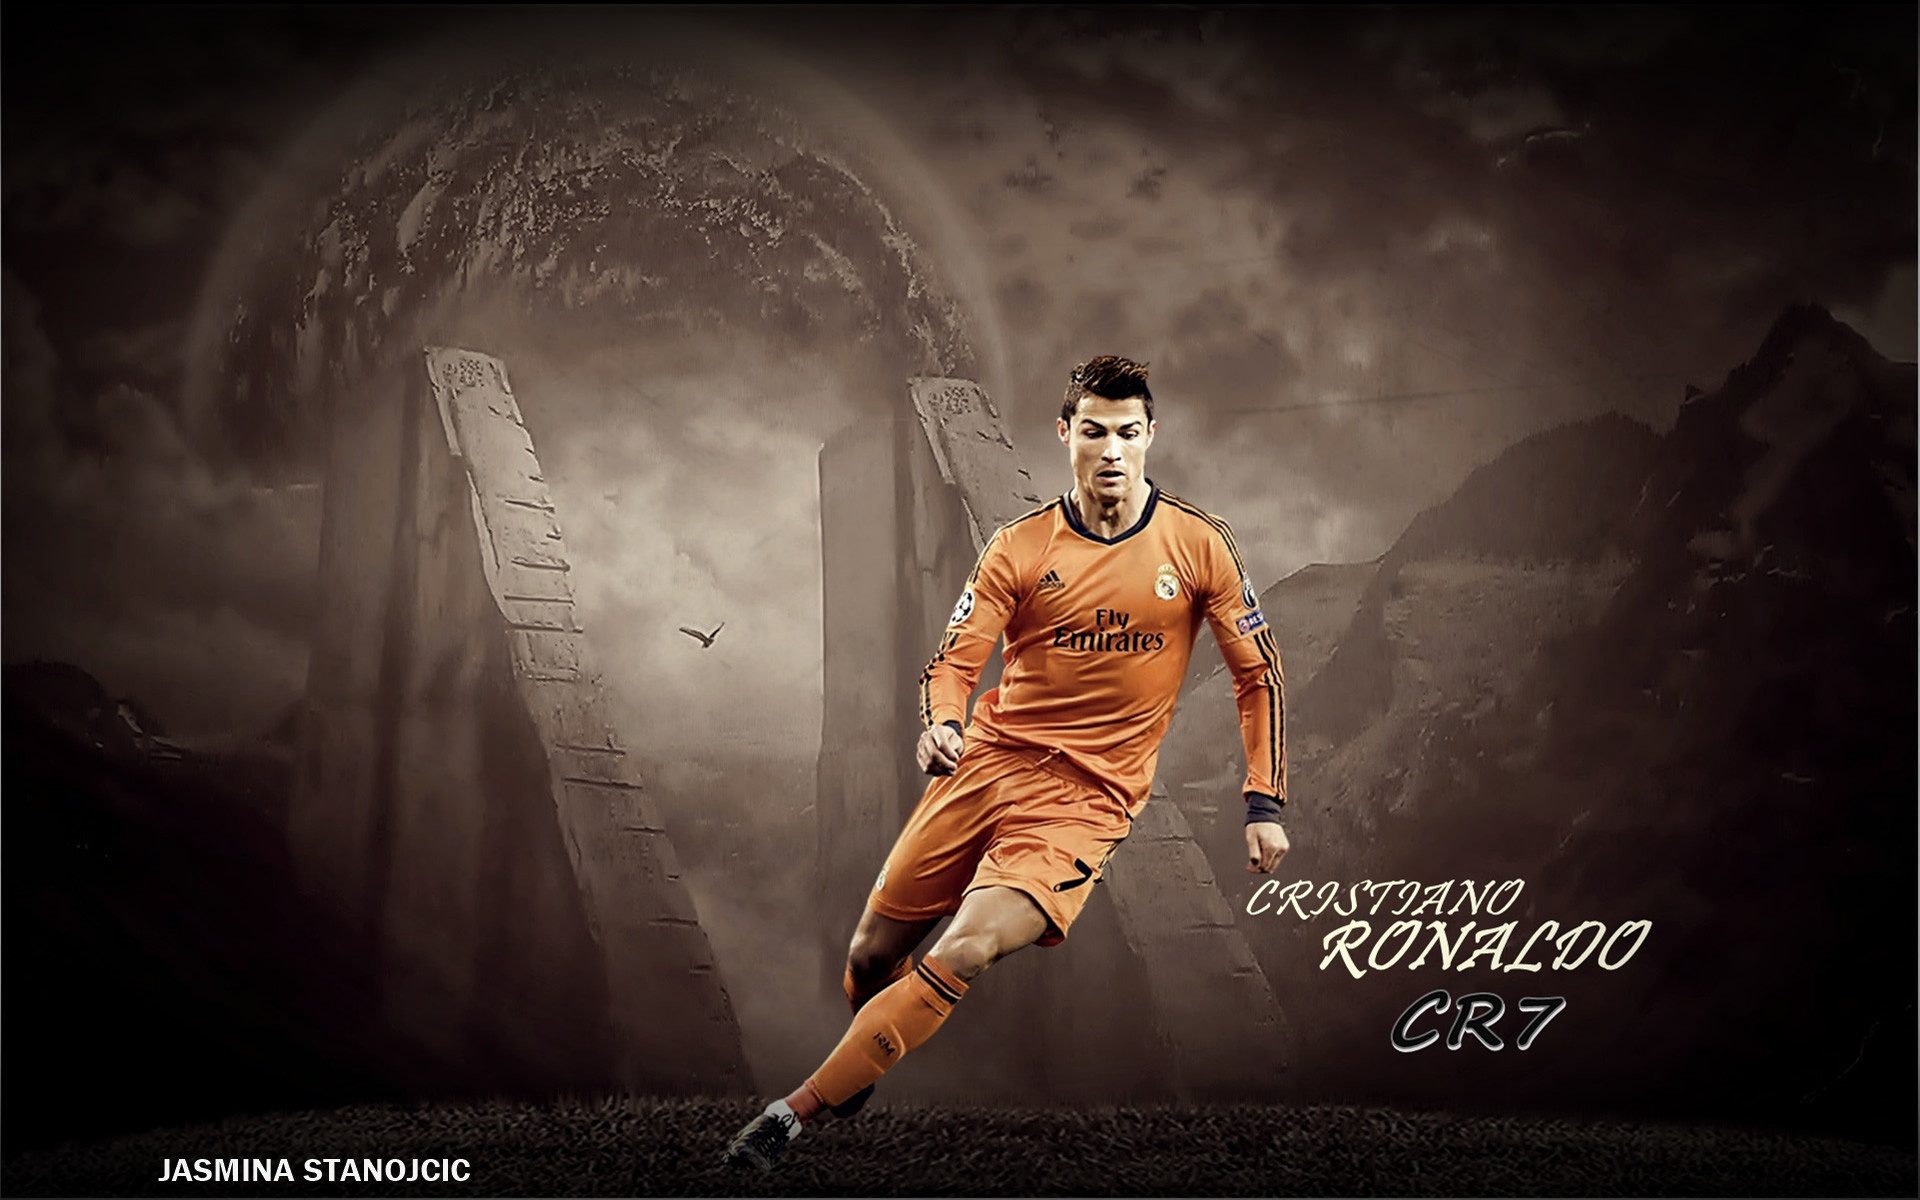 Cristiano Ronaldo Real Madrid HD desktop wallpaper 1024576 Images Of Cristiano Ronaldo Wallpapers